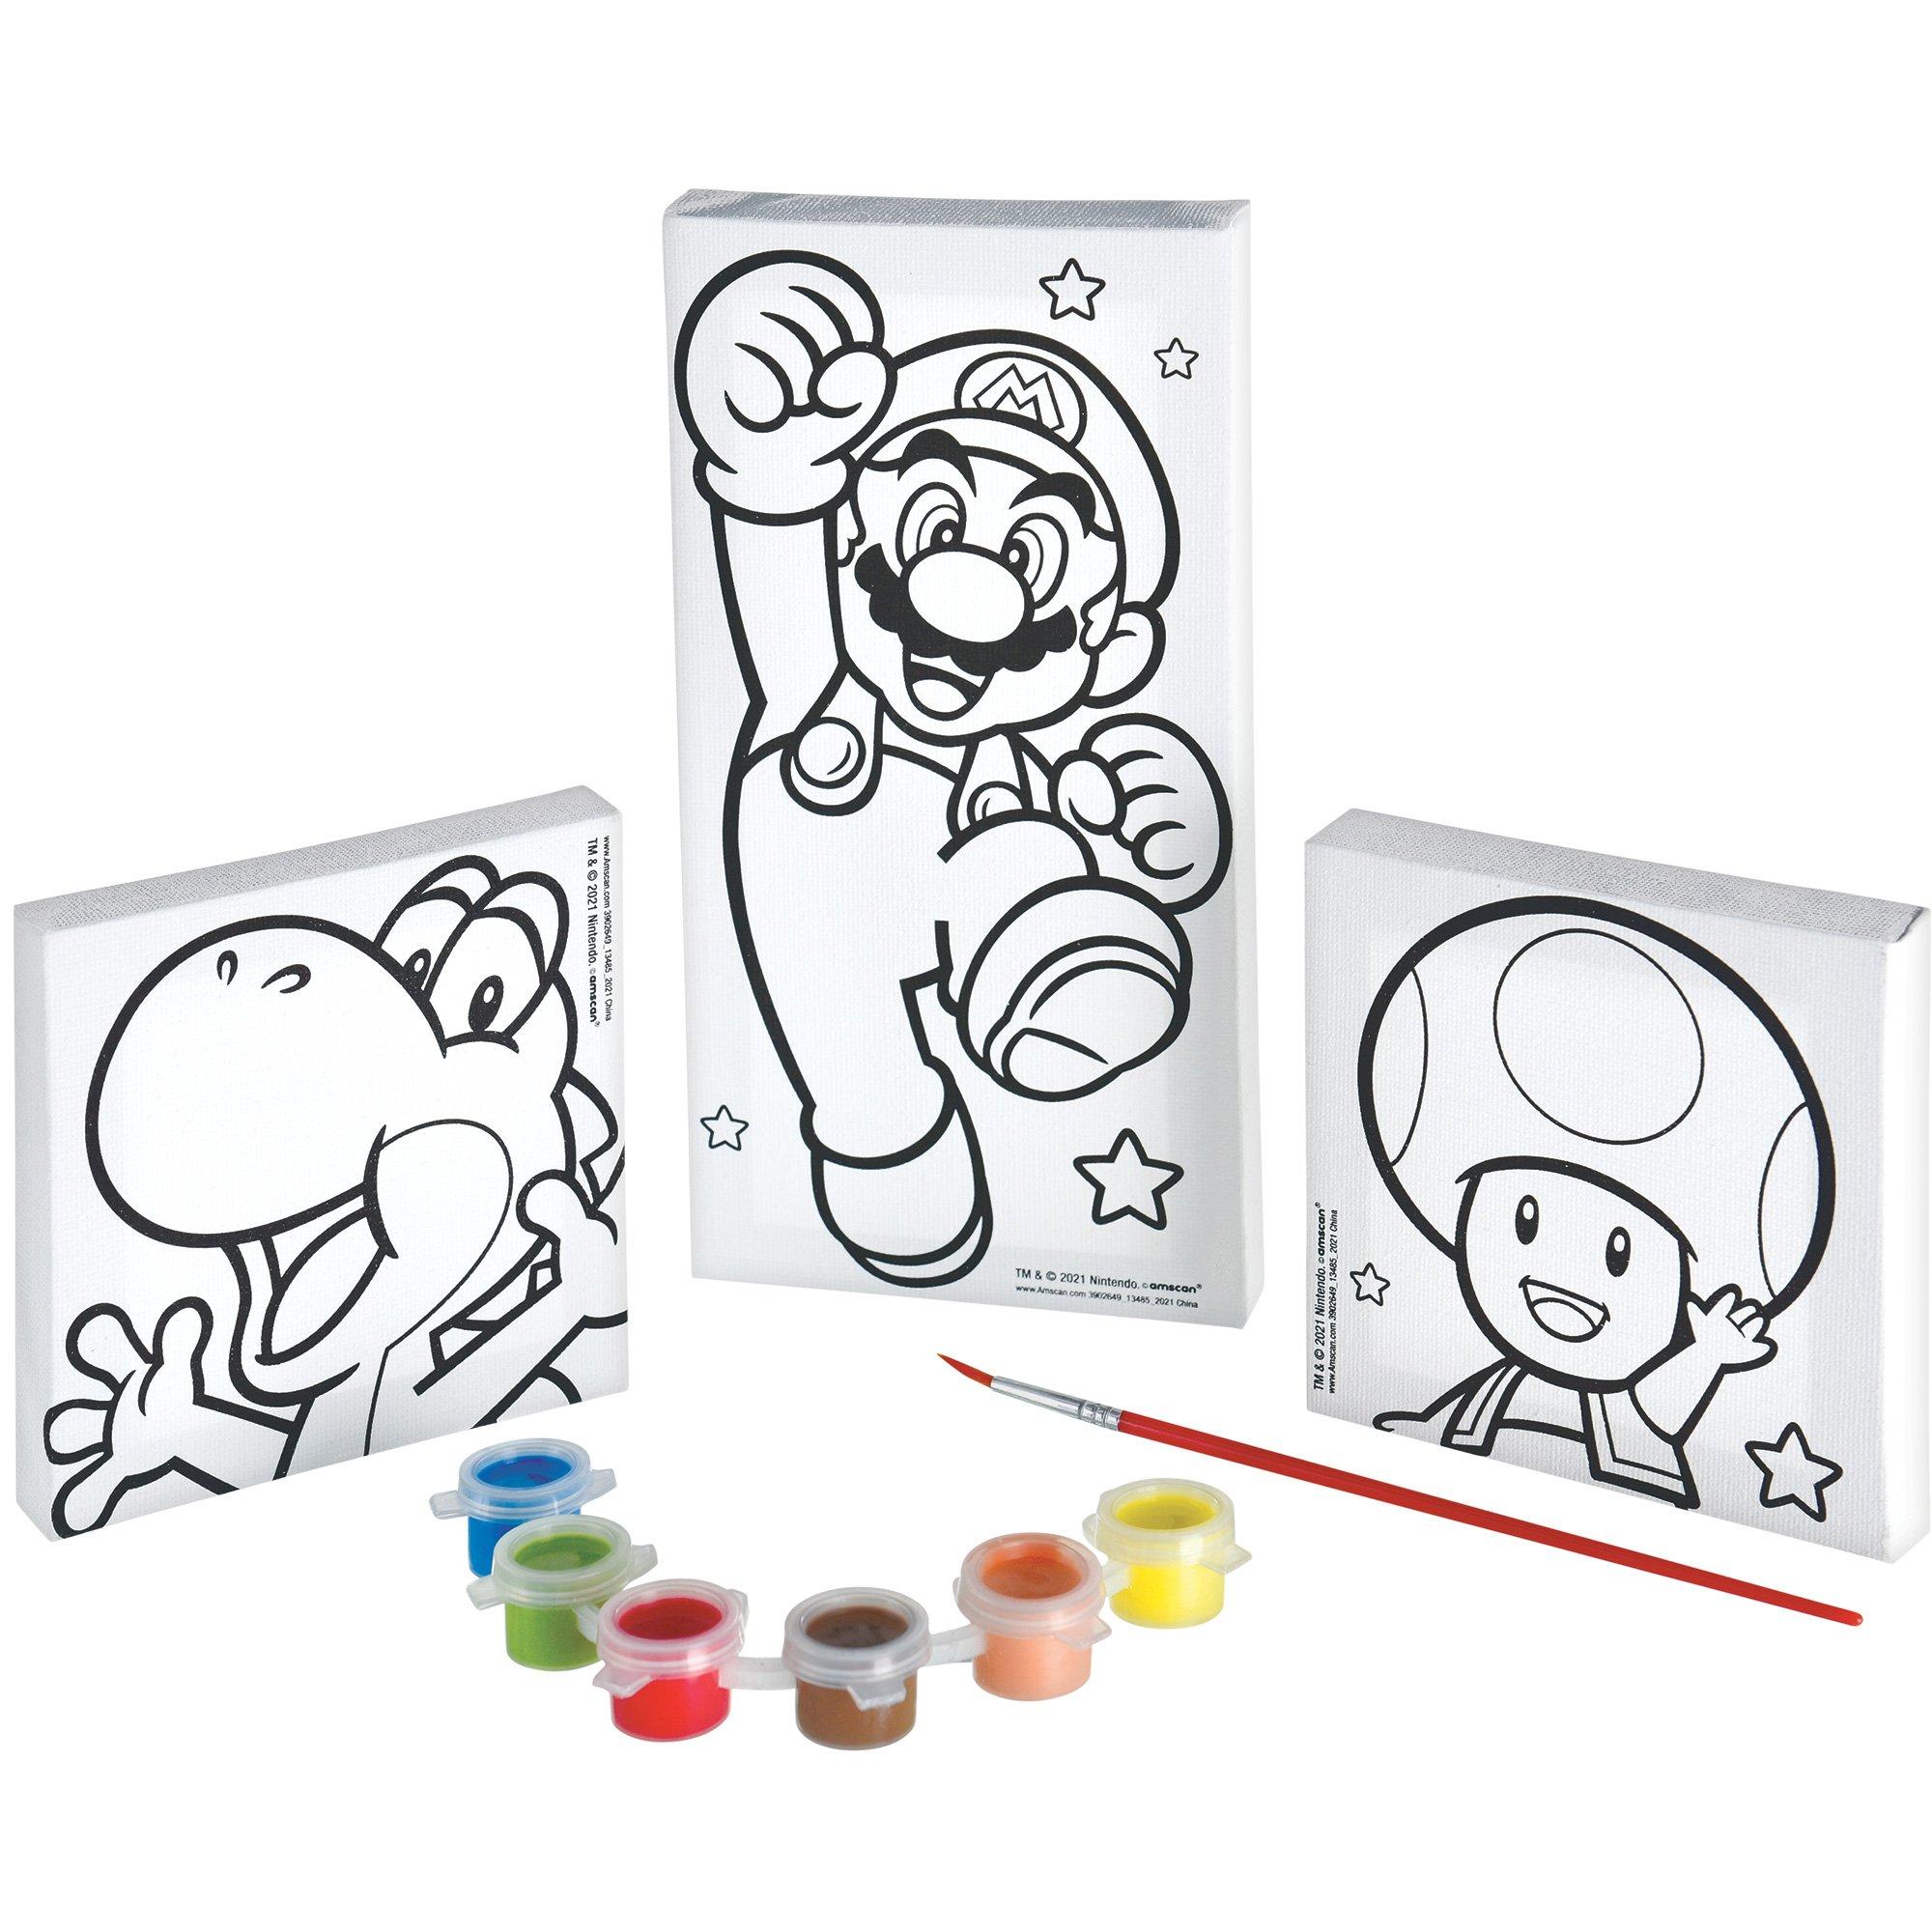 Innovative Designs 30385450 Super Mario Paint Set